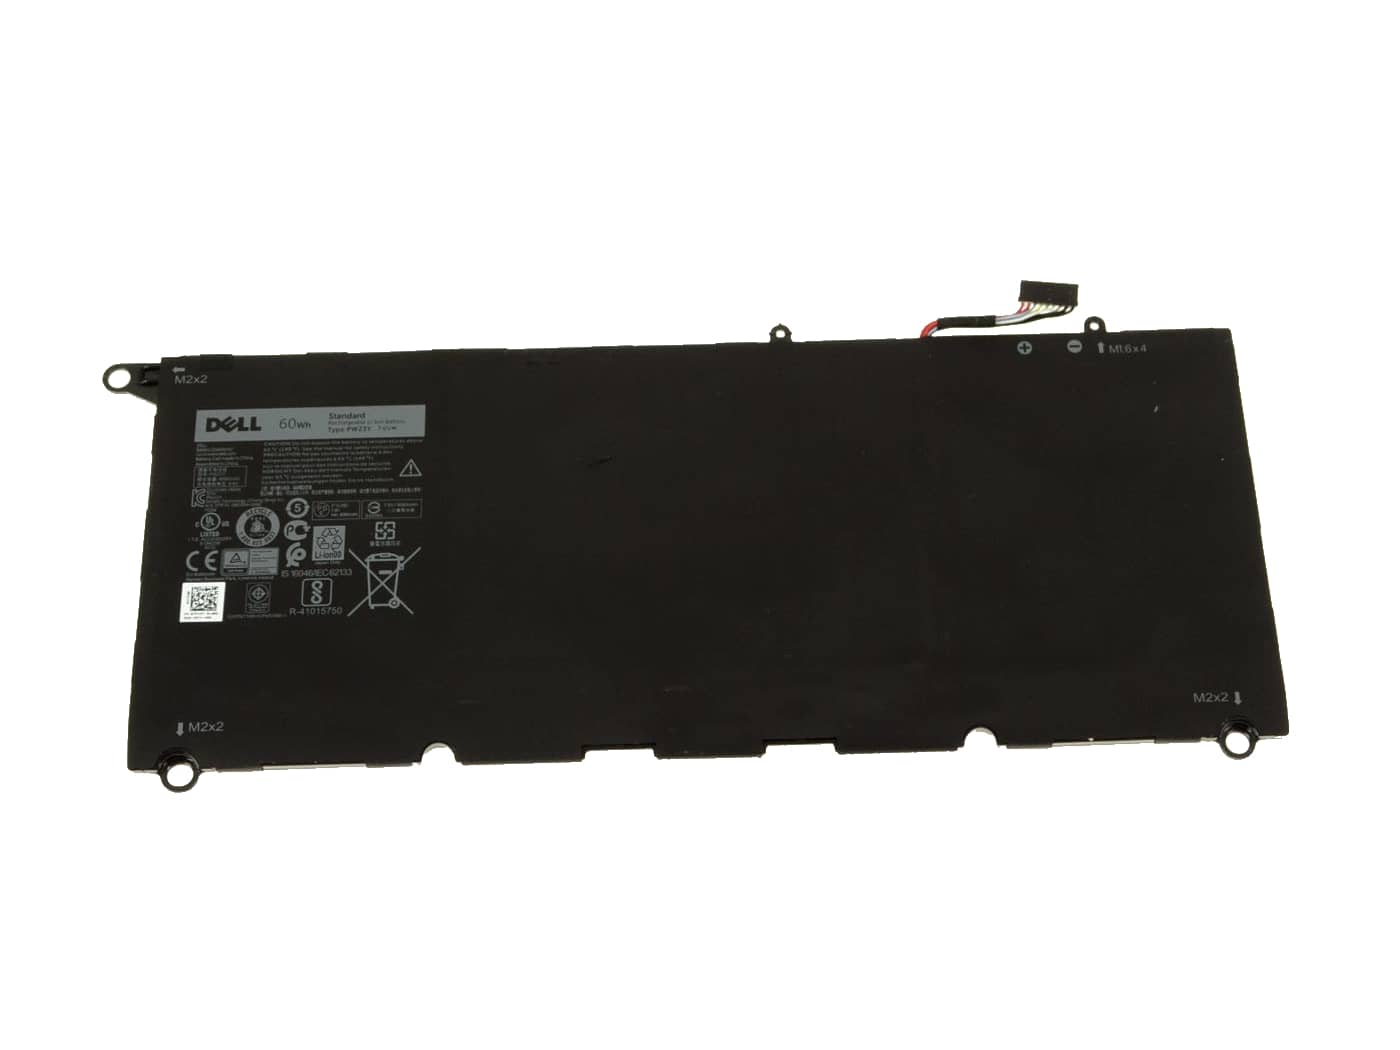 Dell XPS13 9360 Laptop Battery 60Wh 4 Cell PW23Y TP1GT | Black Cat PC